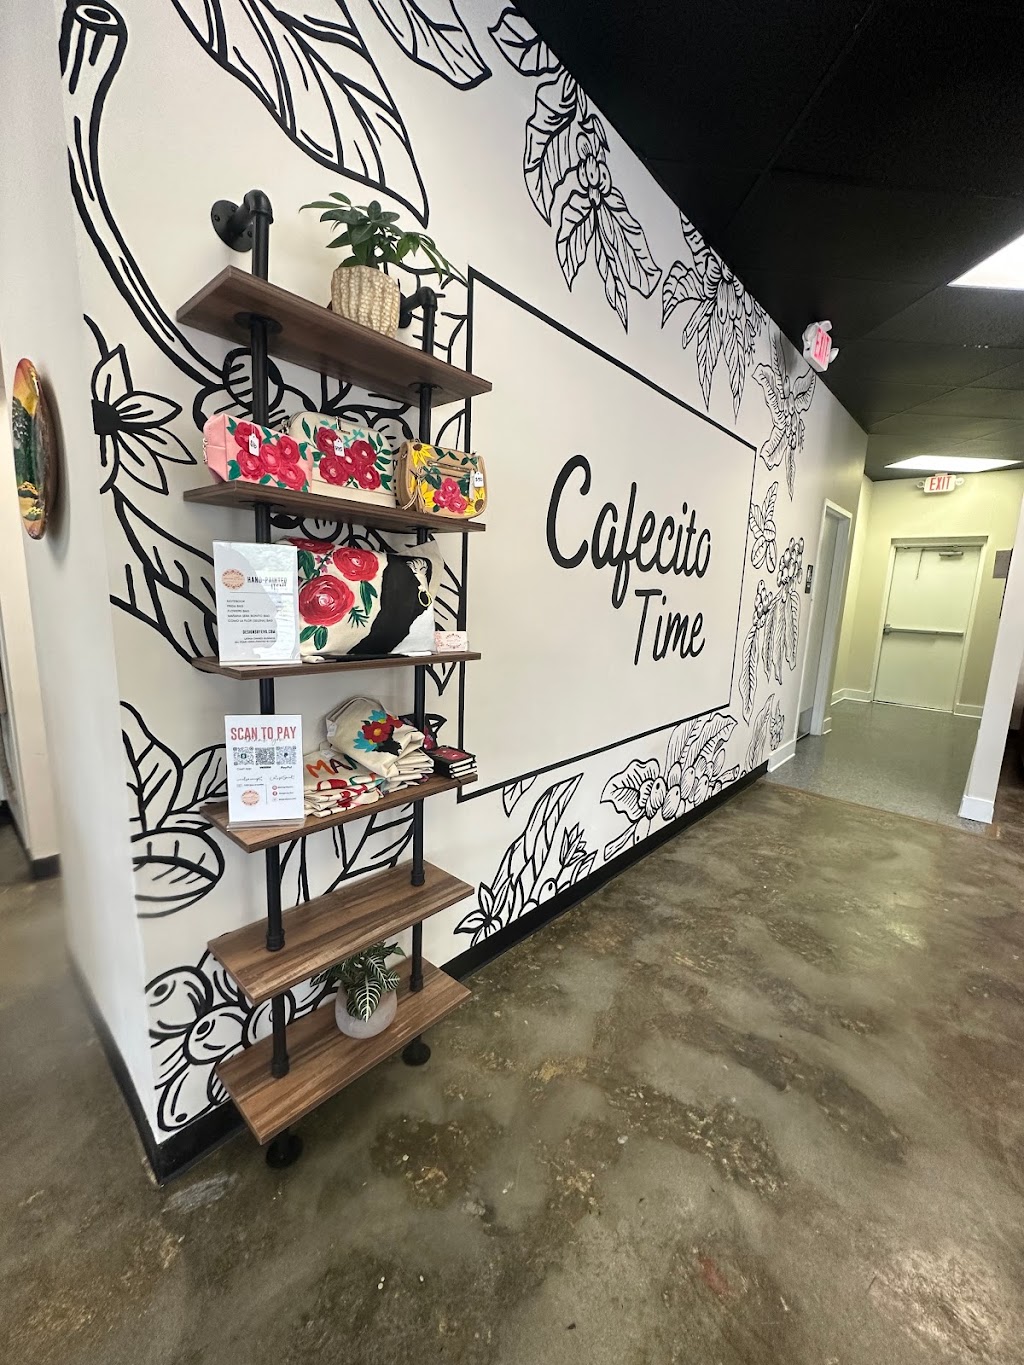 Coffee Alley - Callejon del Cafe | 7310 Harrison St, Omaha, NE 68127, USA | Phone: (402) 881-0480